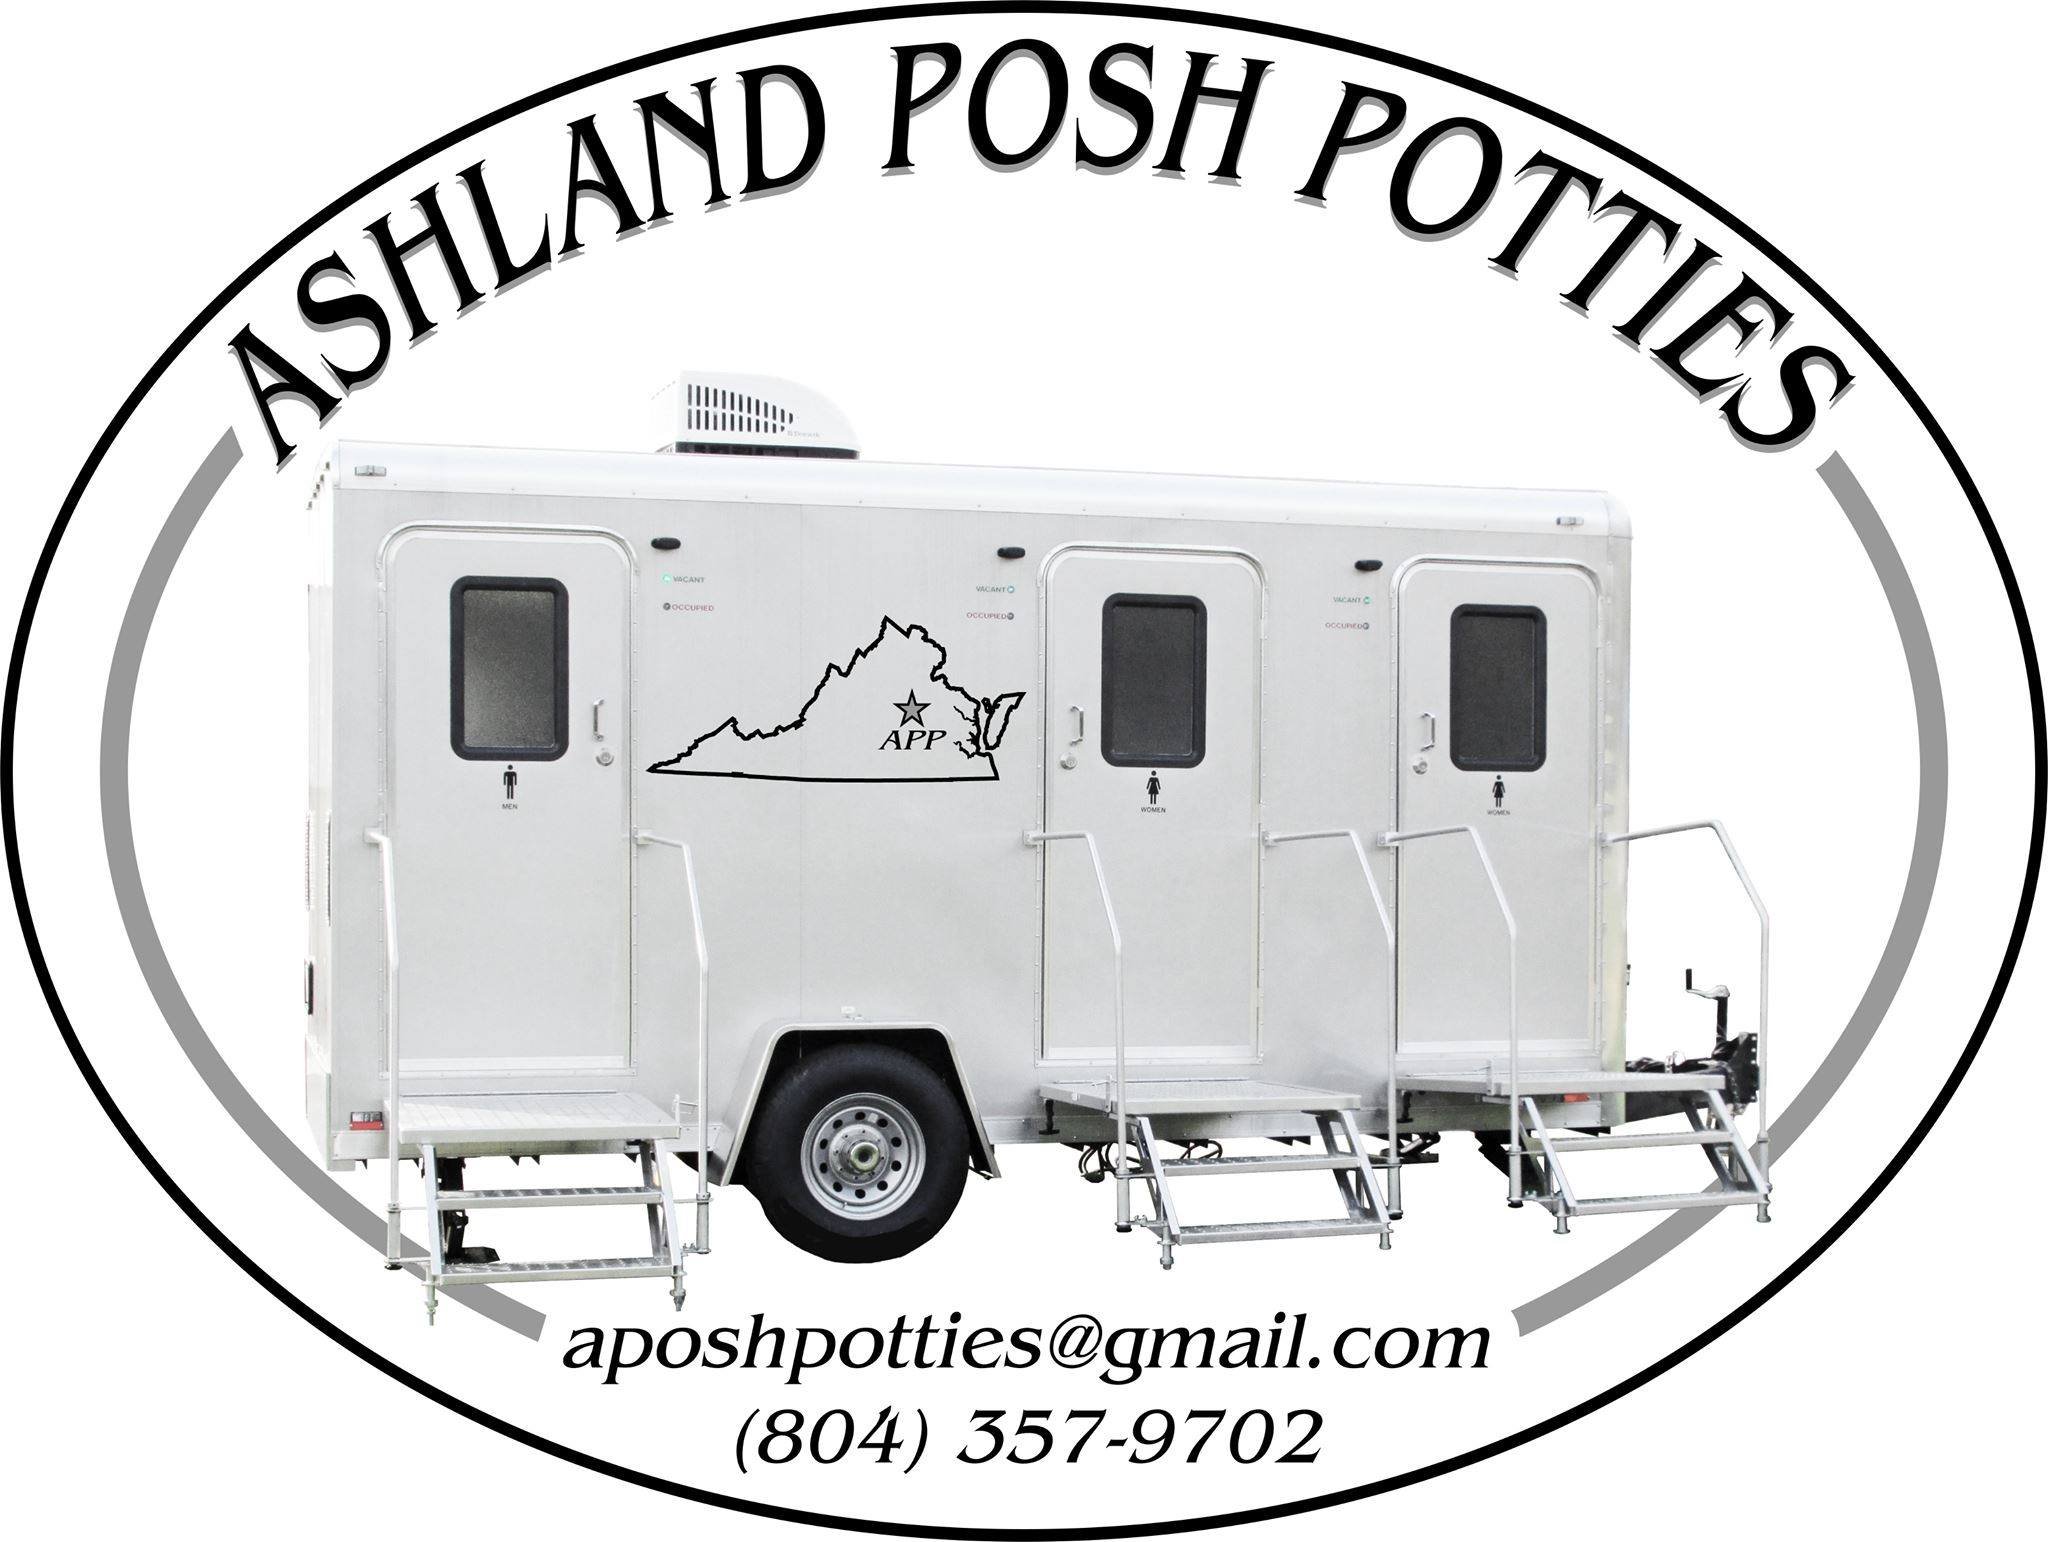  Ashland Posh Potties are a silver sponsor of the Downtown Ashland Association. 